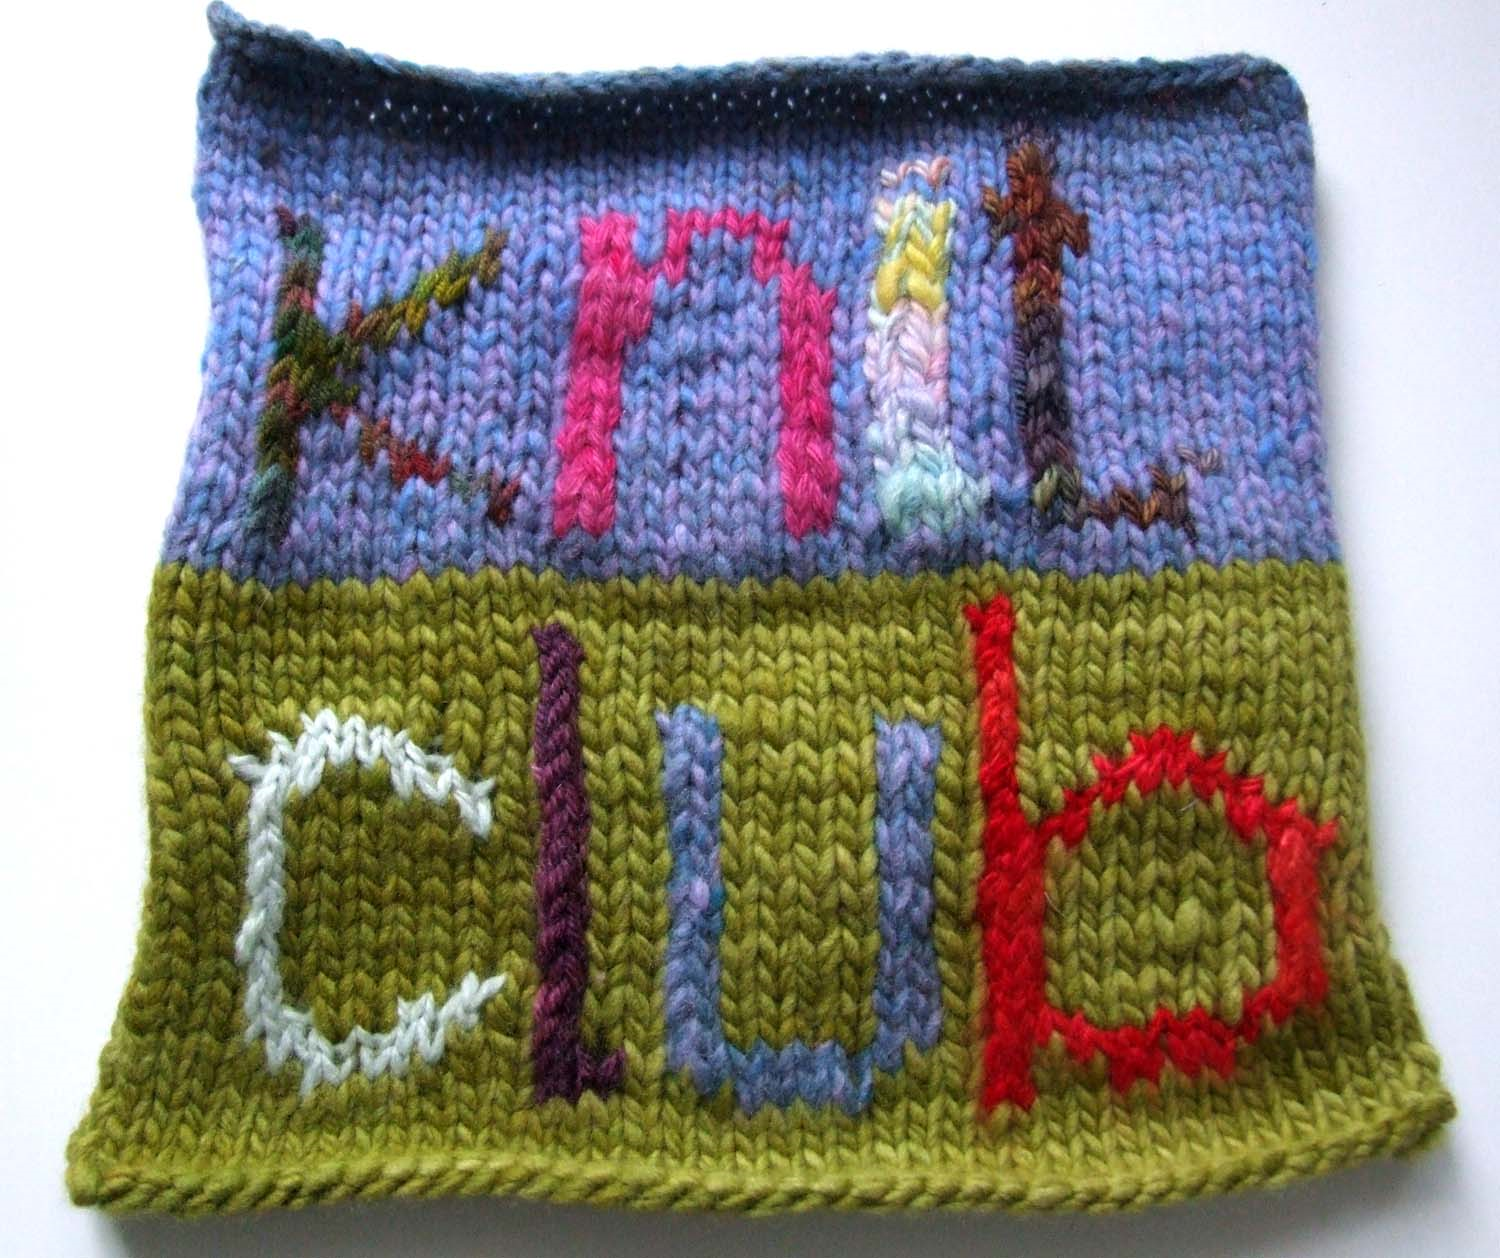 knit club